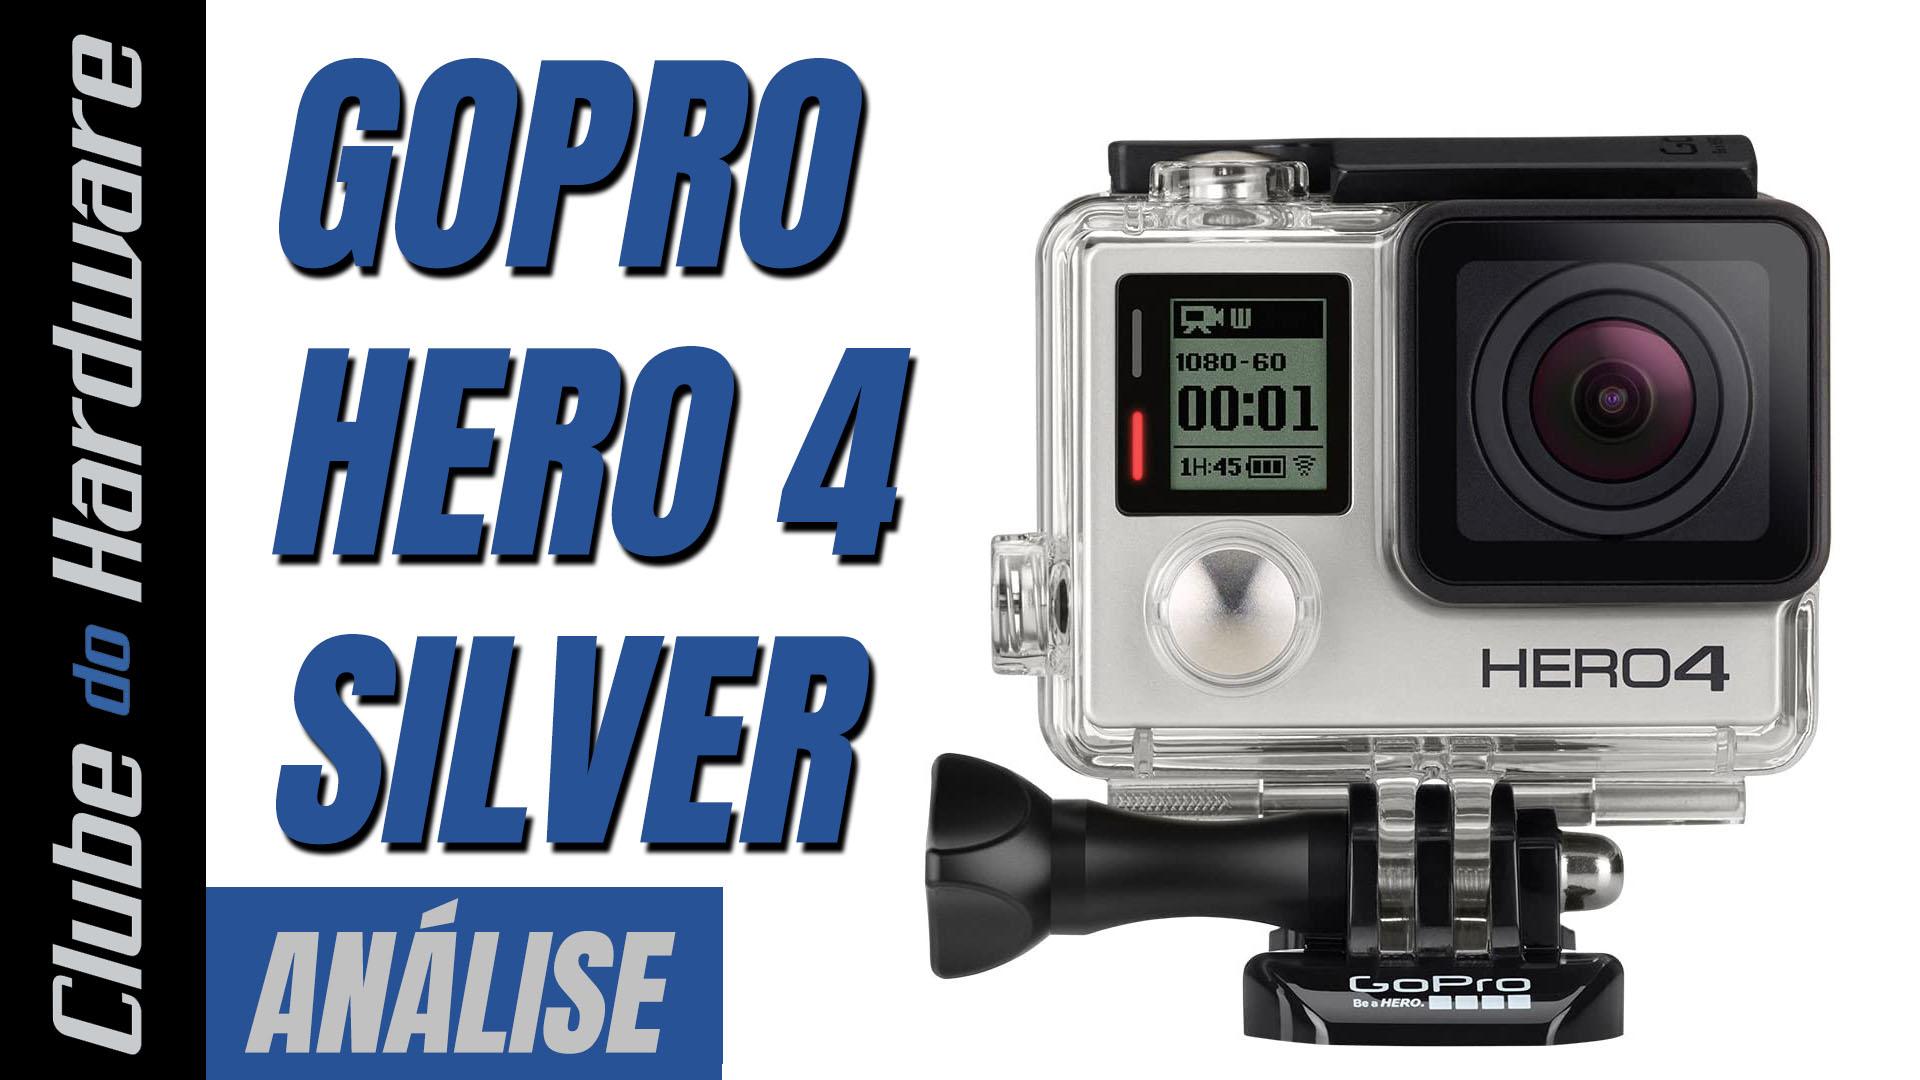 Teste da câmera GoPro Hero4 Silver